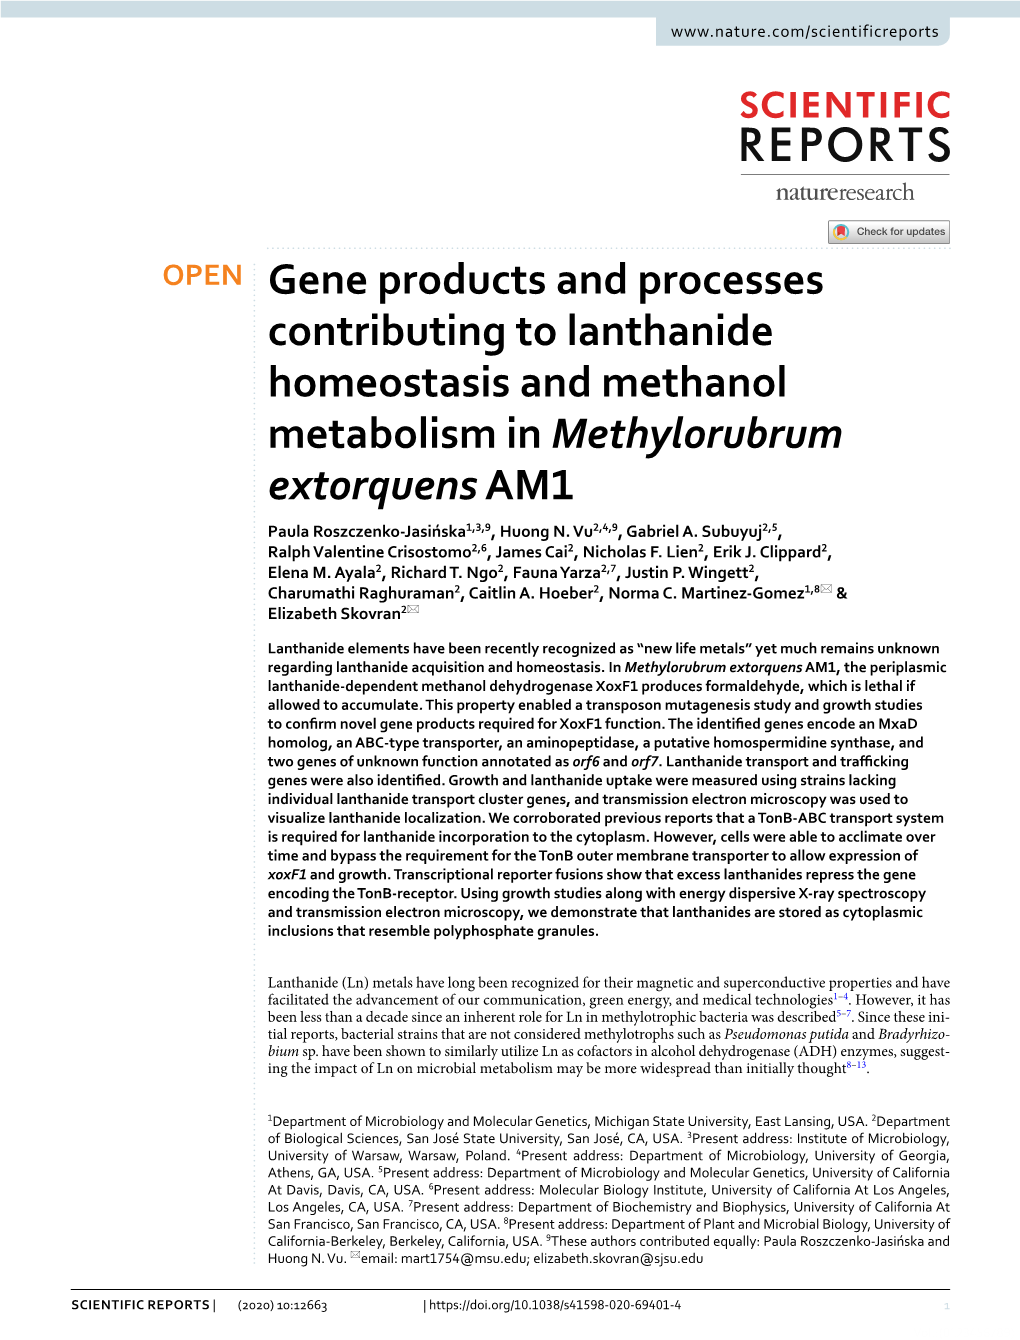 Gene Products and Processes Contributing to Lanthanide Homeostasis and Methanol Metabolism in Methylorubrum Extorquens AM1 Paula Roszczenko‑Jasińska1,3,9, Huong N